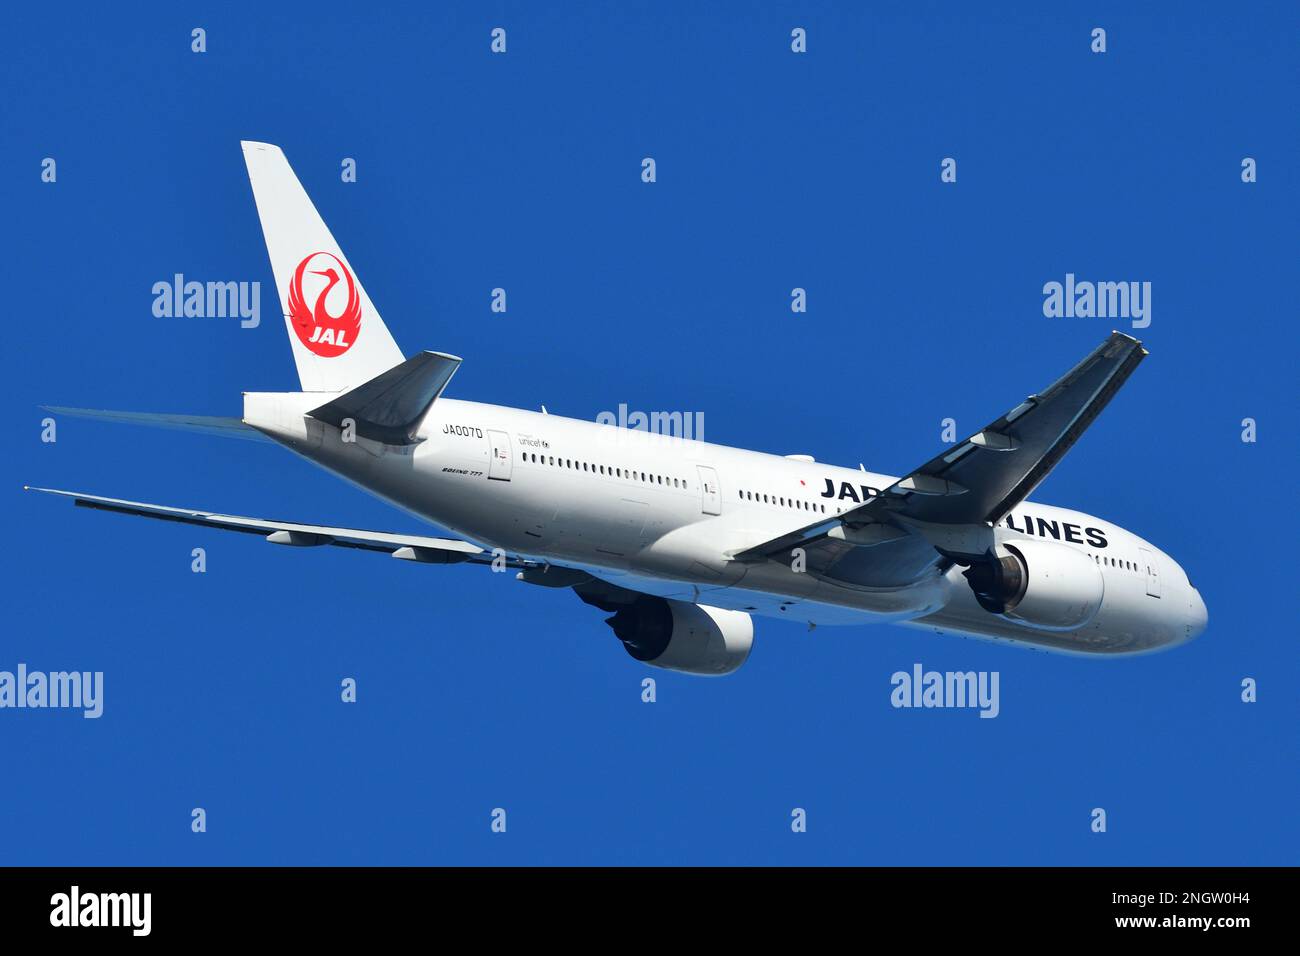 Tokyo, Japan - December 26, 2020: Japan Airlines (JAL) Boeing B777-200 (JA007D) passenger plane. Stock Photo